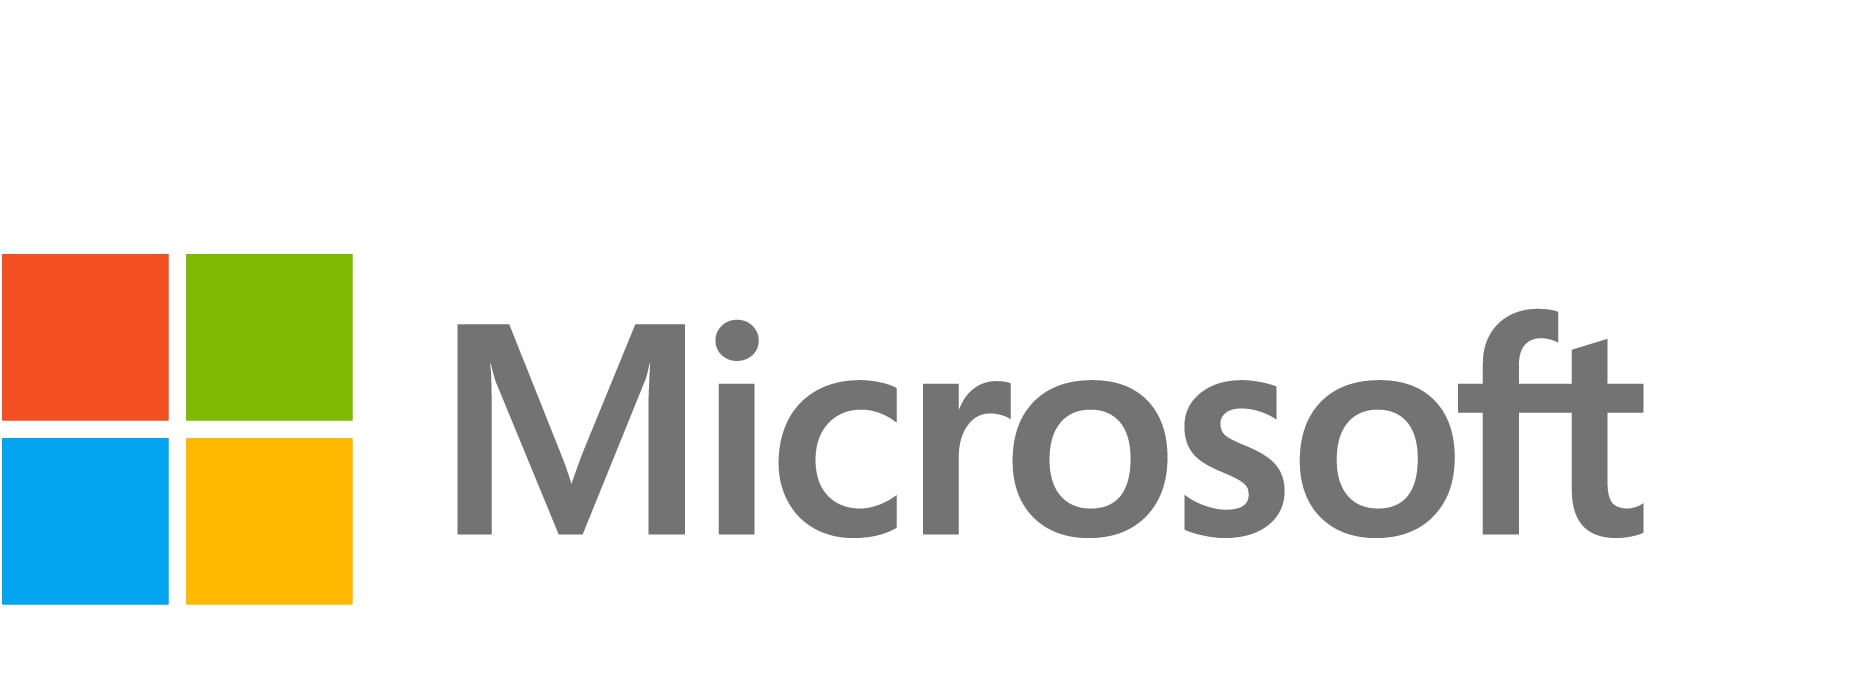 Microsoft Virtual Desktop Infrastructure - subscription license (1 month) - 1 device - with Microsoft Desktop